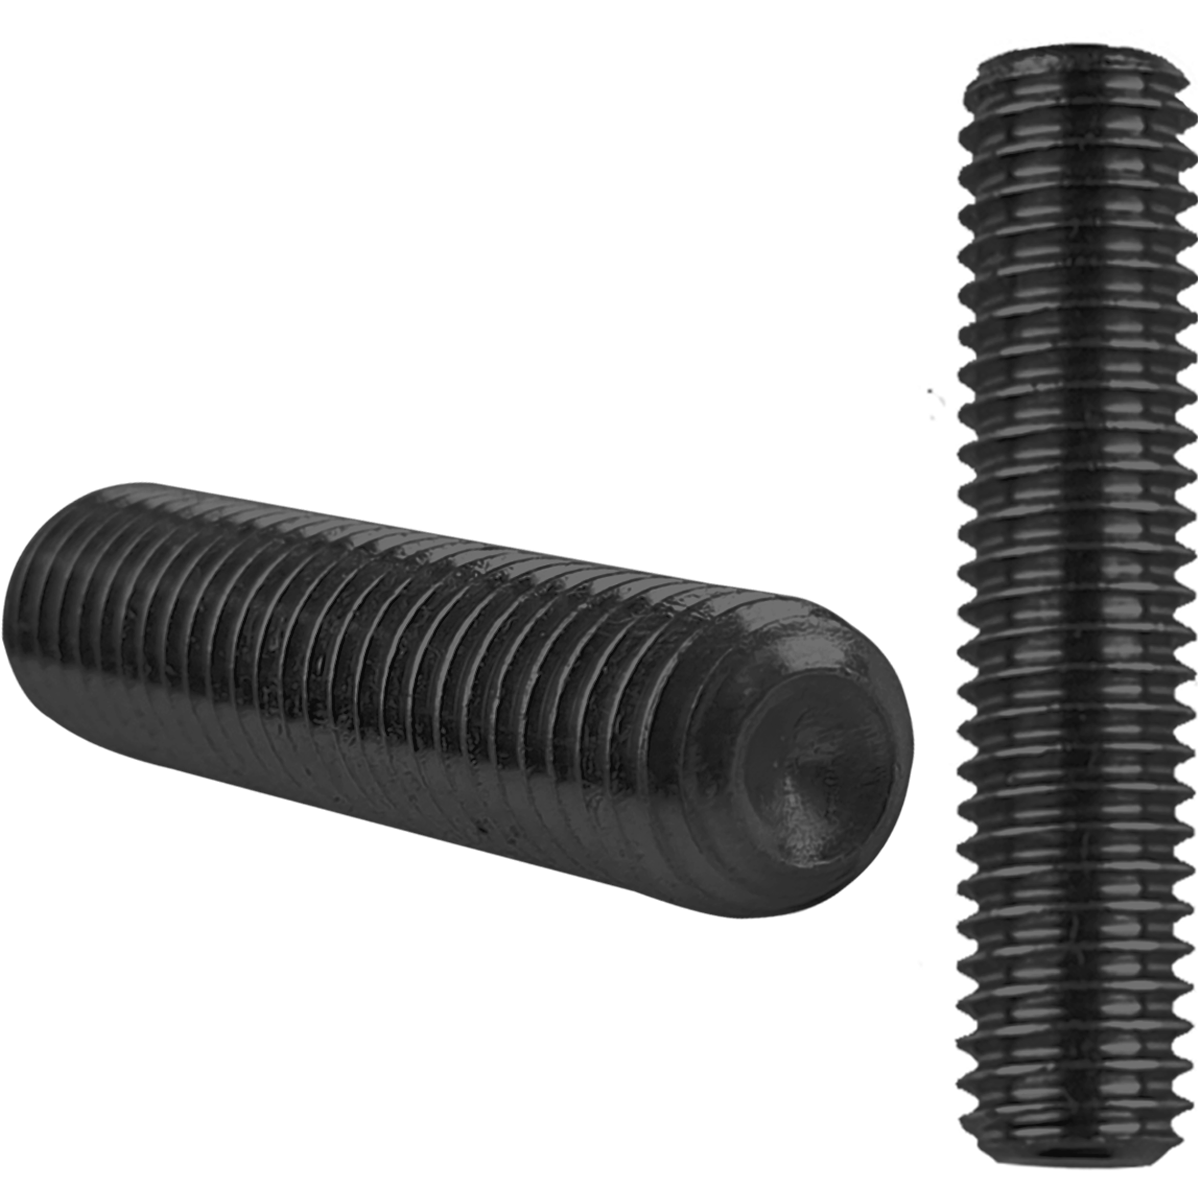 Self-colour cup point socket set screws, also known as grub screws, or hex set screws